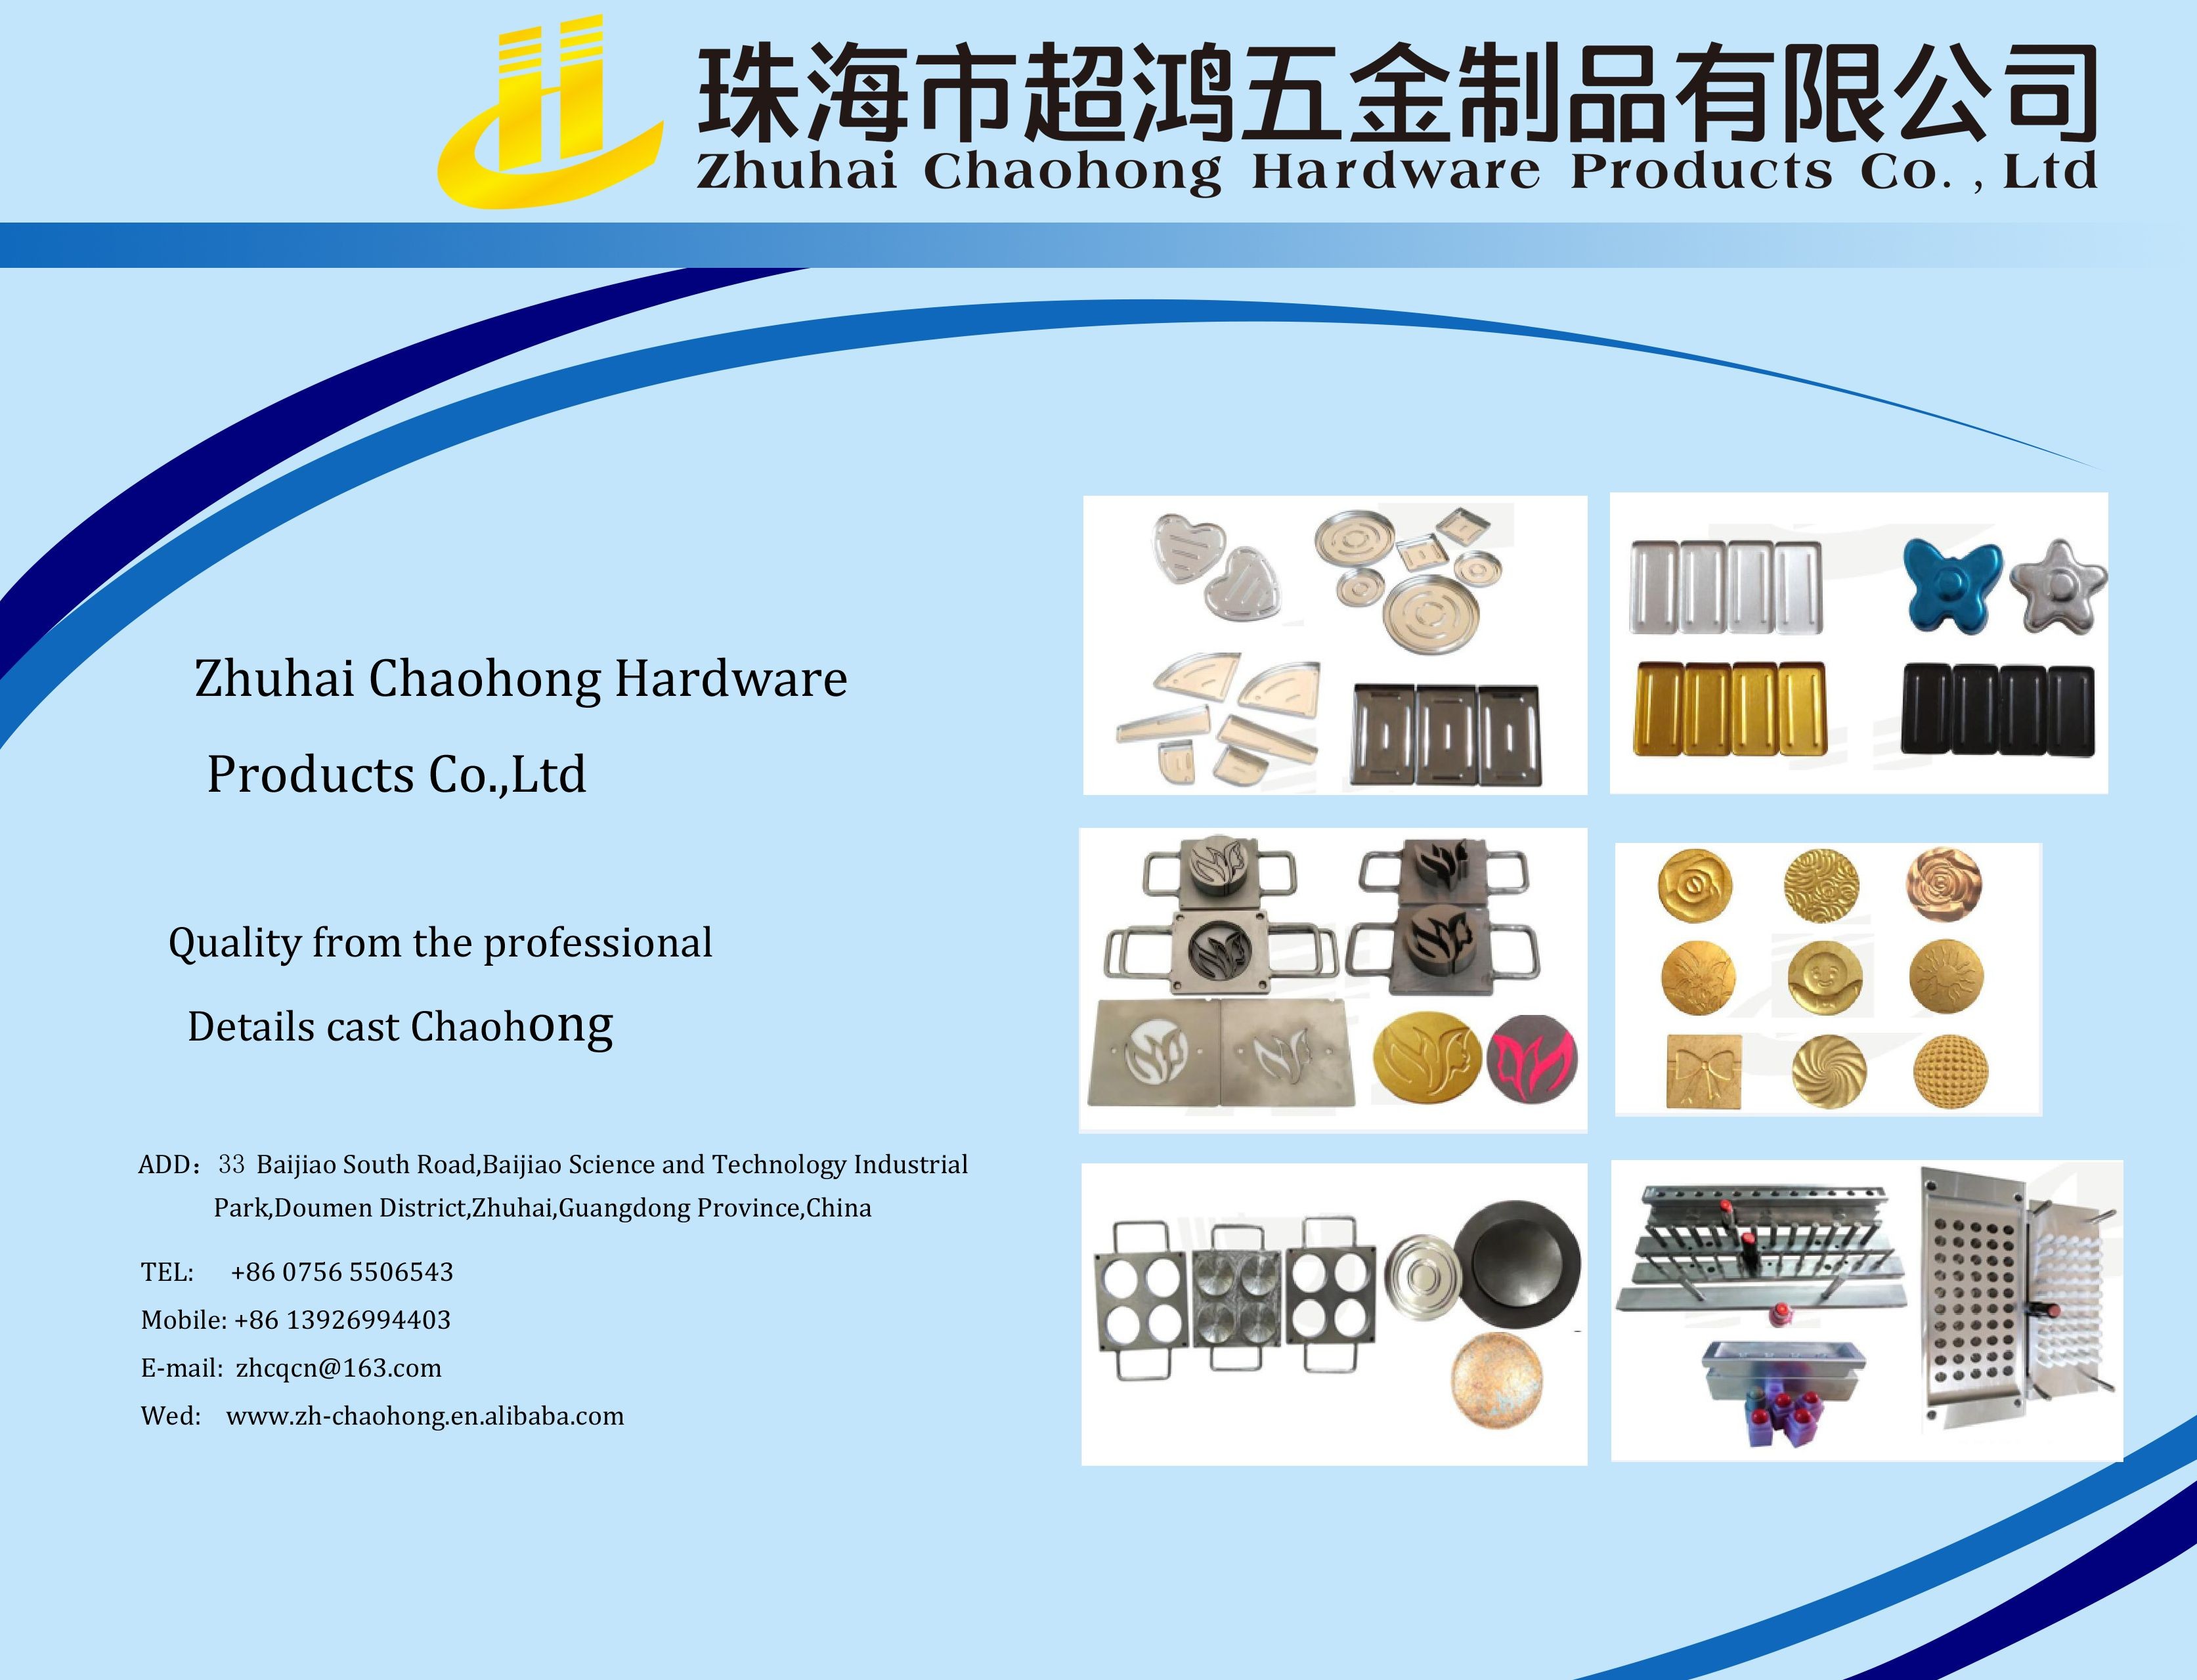 Zhuhai Chaohong Hardware Products Co., Ltd.